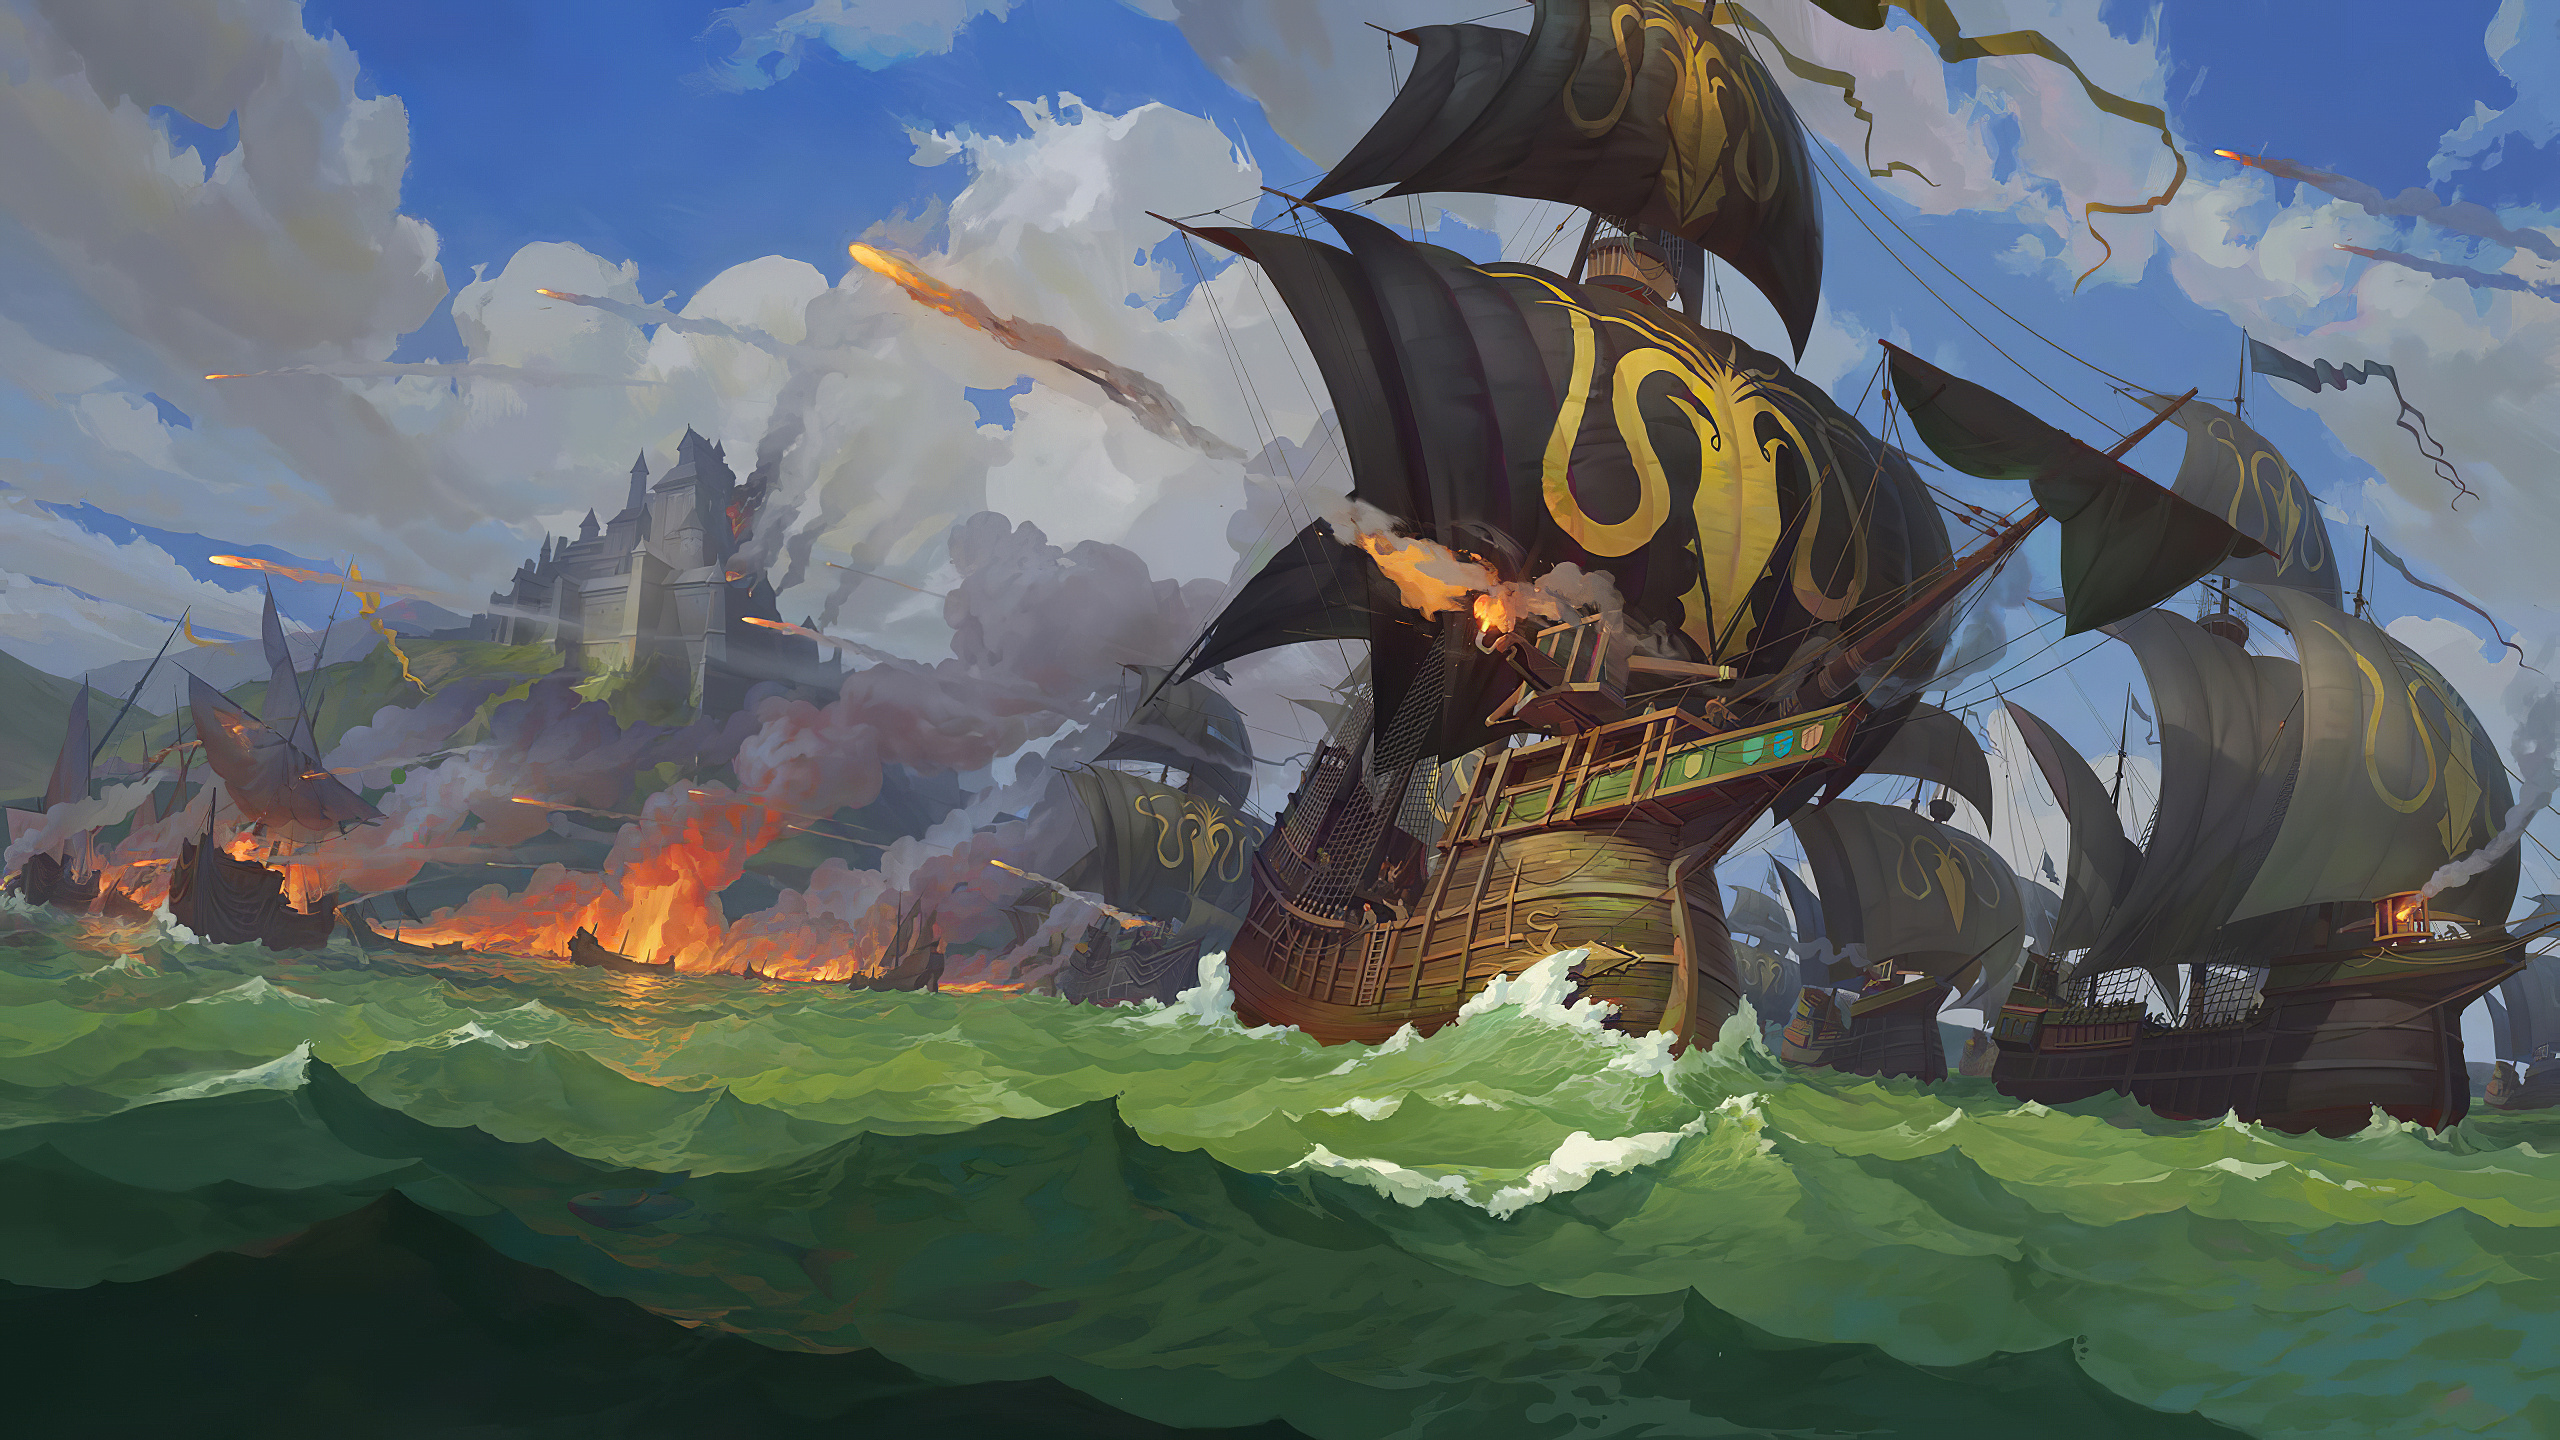 General 2560x1440 digital art fantasy art water sea fleet ship battle daylight sailing A Song of Ice and Fire House Greyjoy